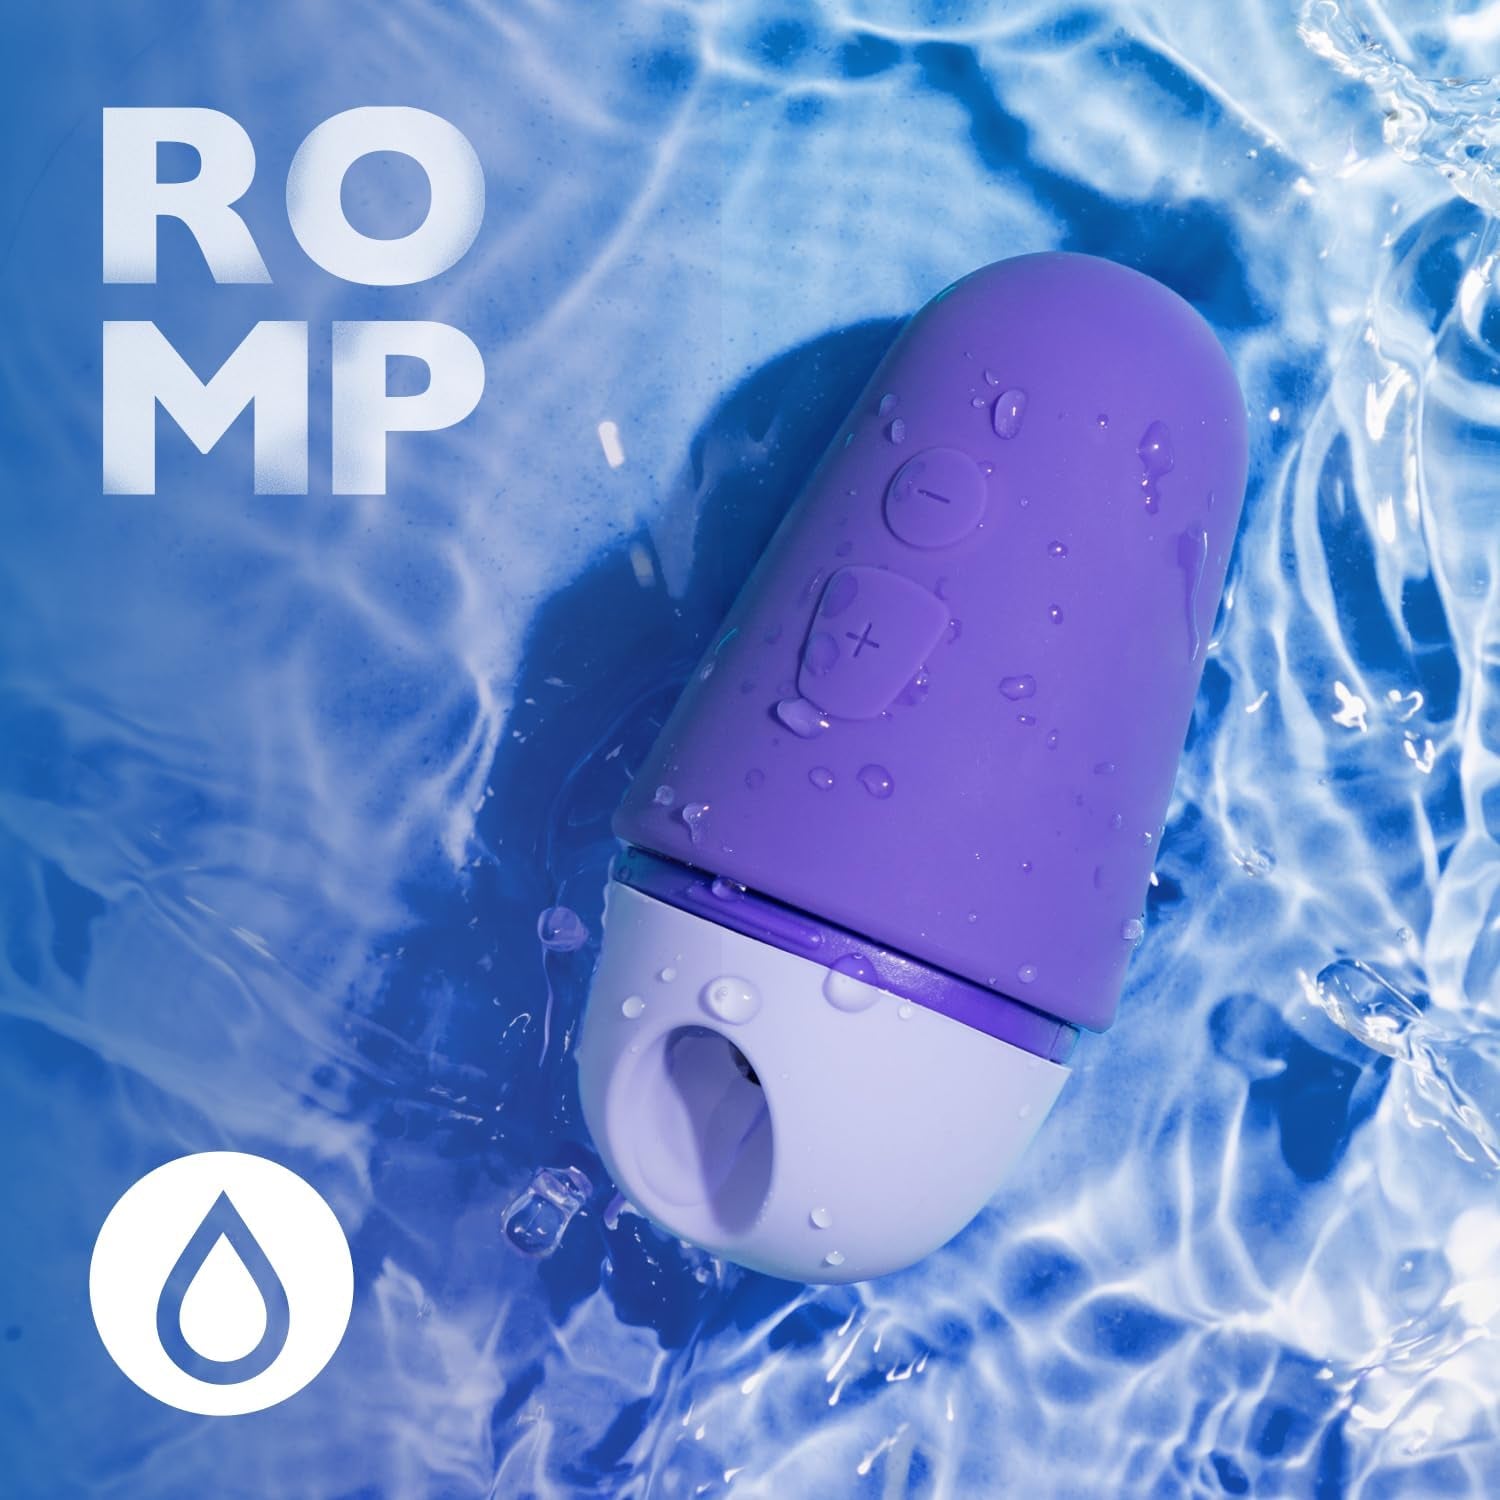 The Romp Free X Clit Sucker Waterproofing